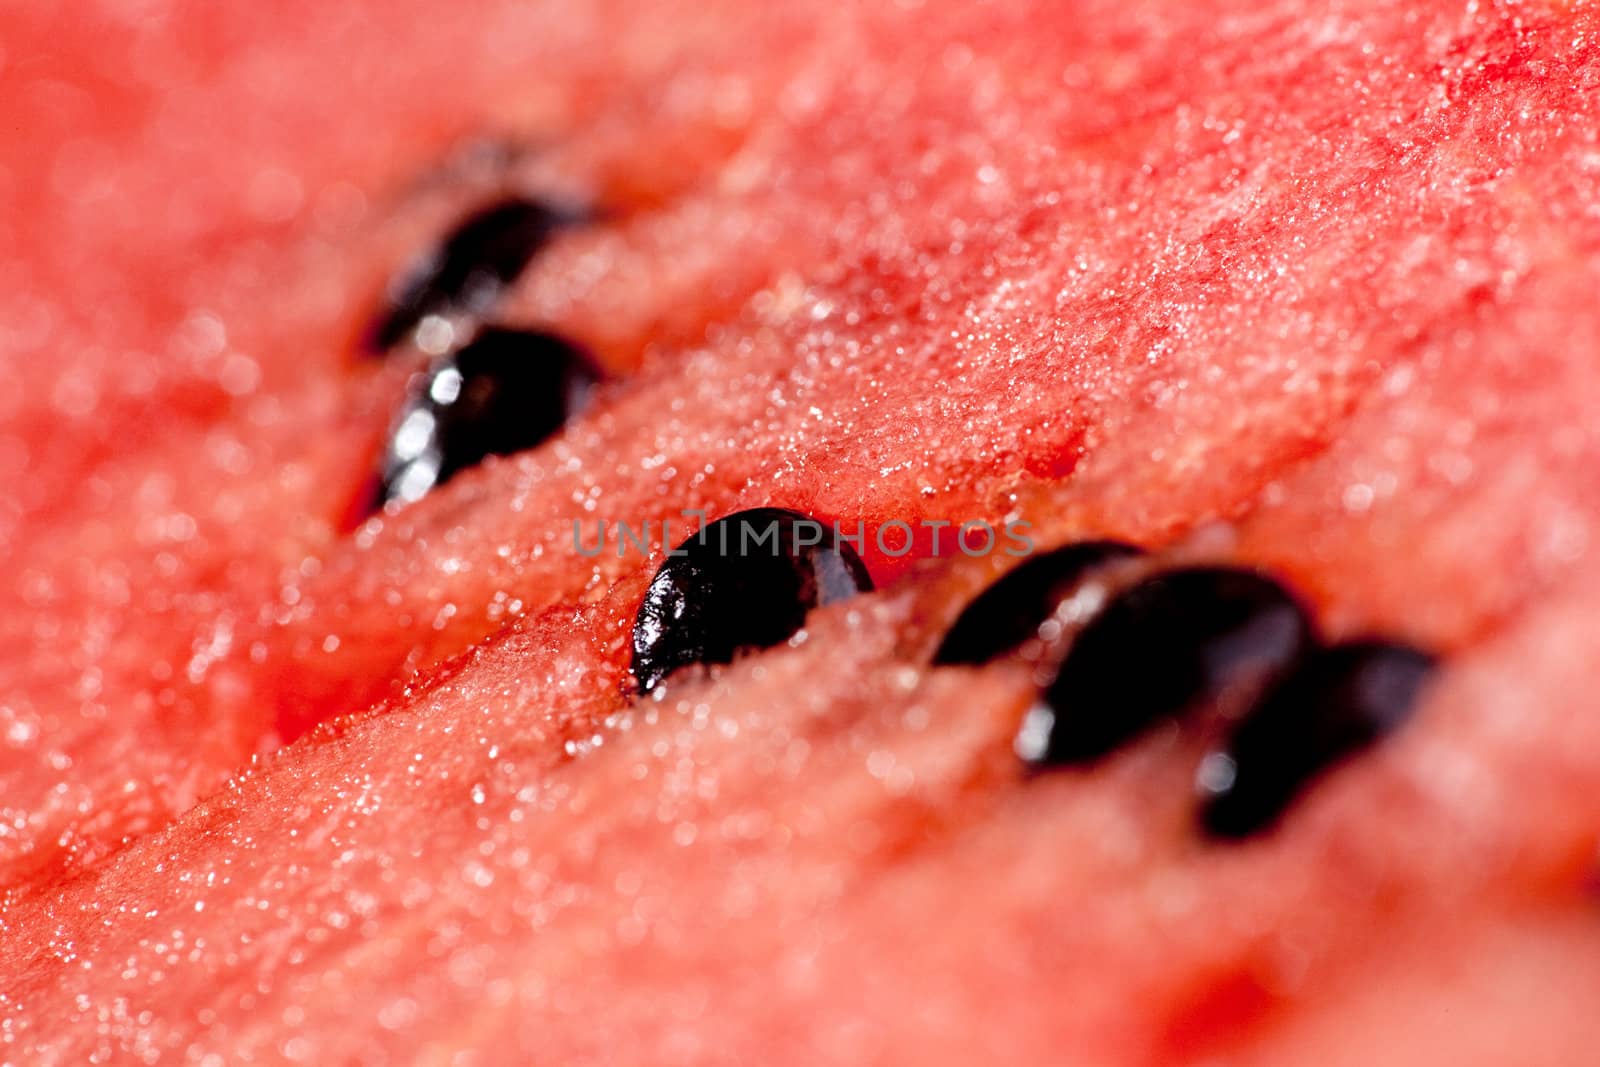 A ripe watermelon fruit background detail